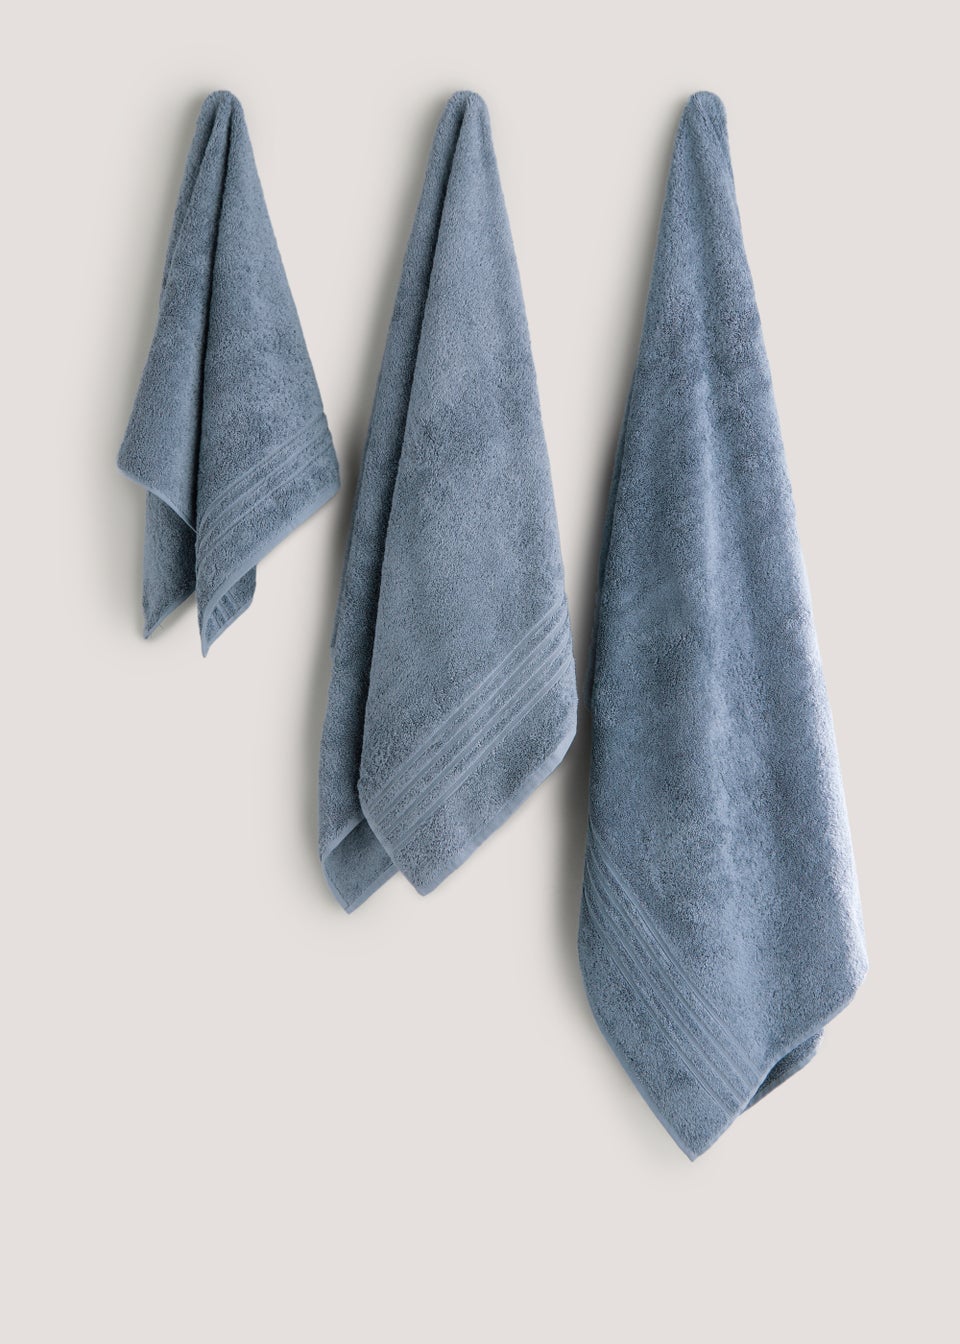 Blue 100% Egyptian Cotton Towels